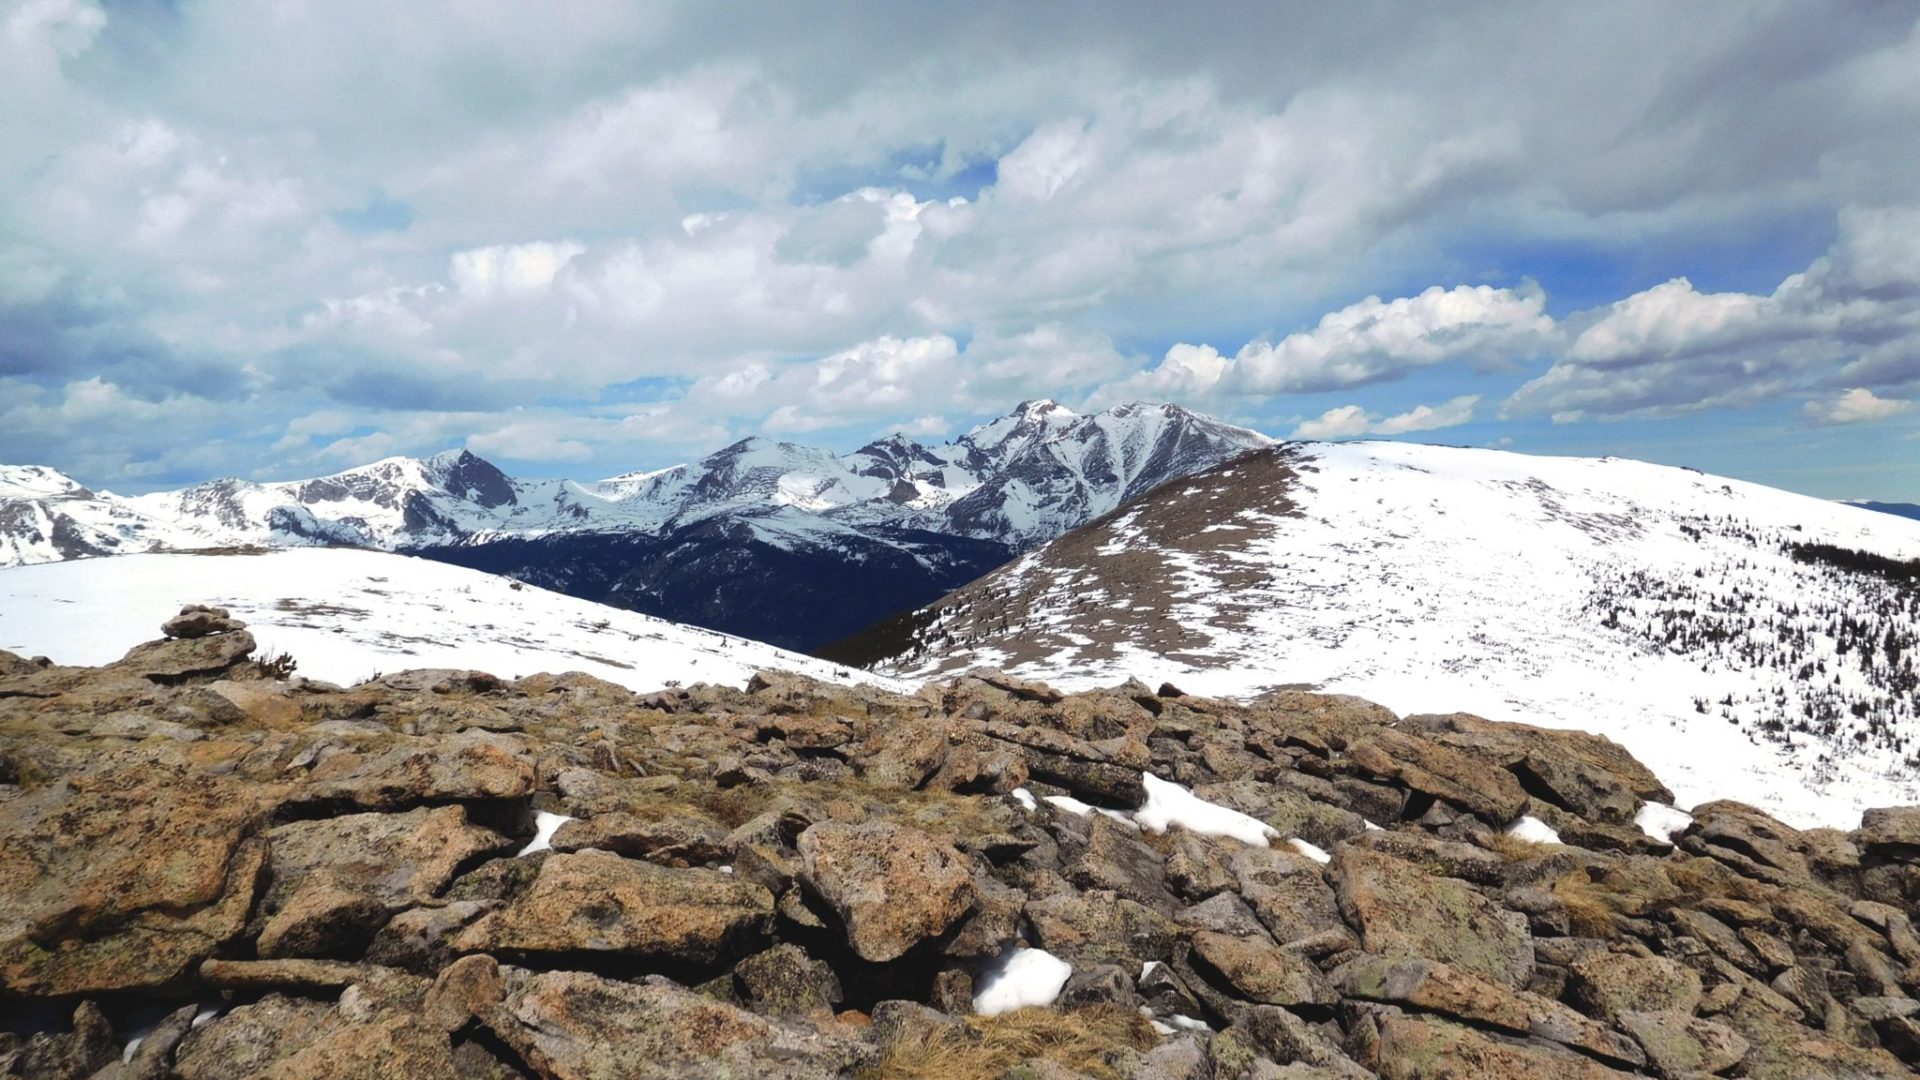 St Vrain Mountain Trail (12,162′), Front Range